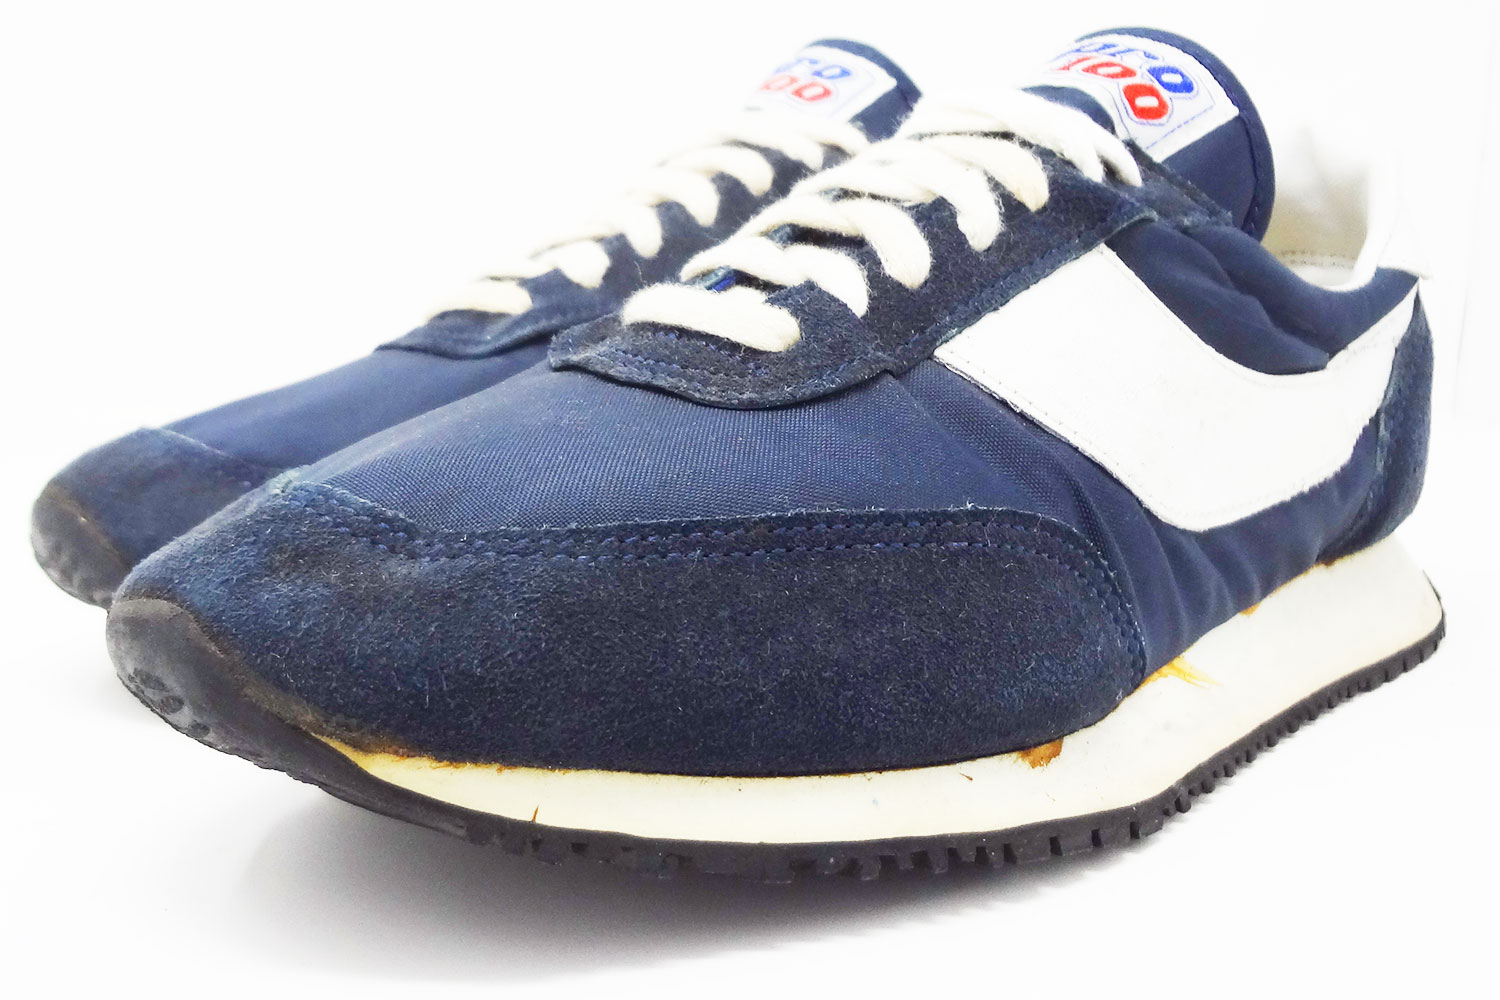 Old school 1980s Pro 100 vintage sneakers @ The Deffest